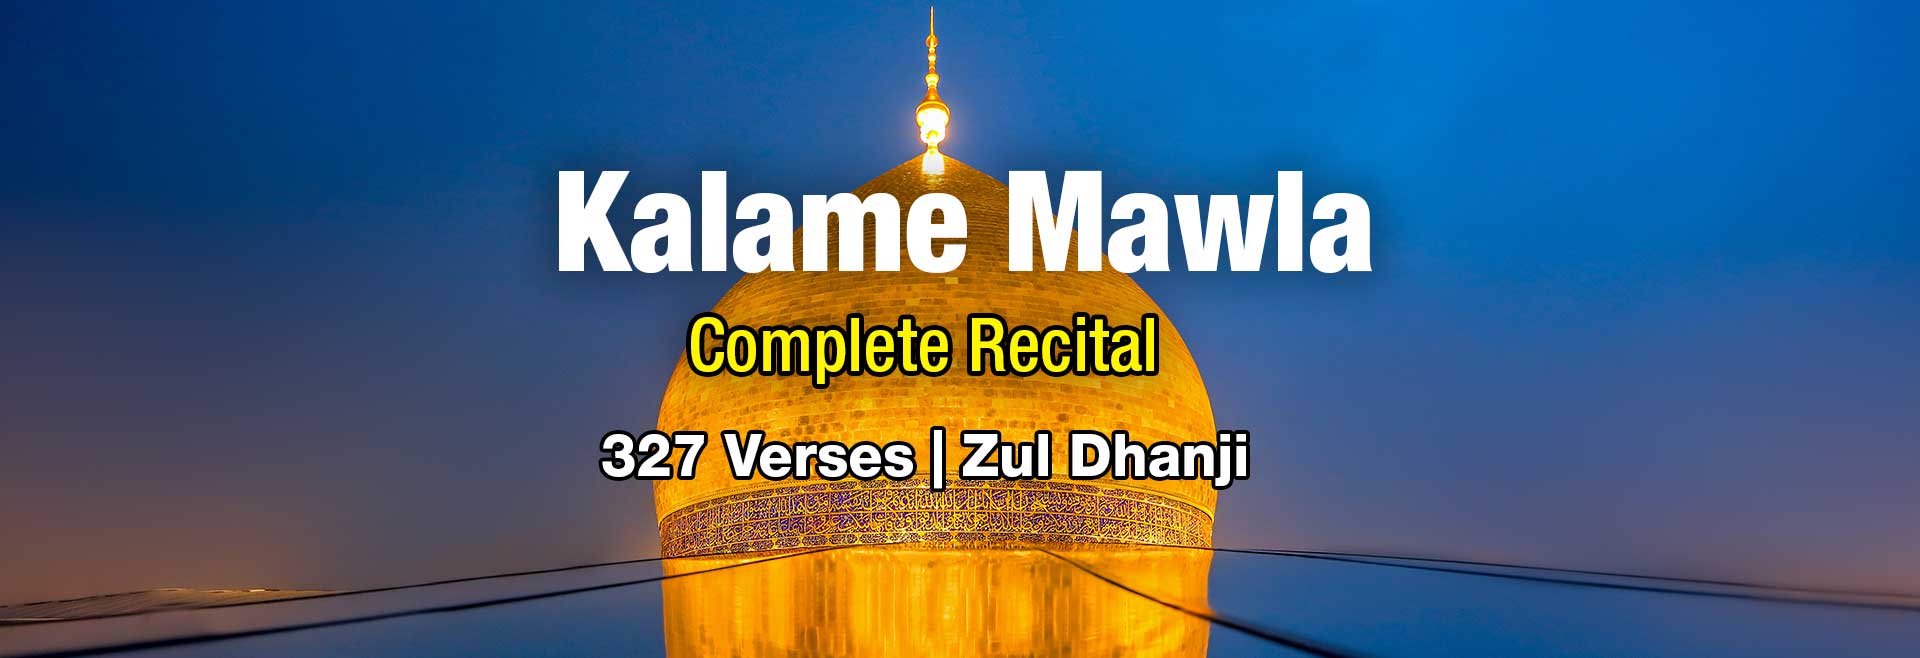 Kalame Mawla - Complete Recital